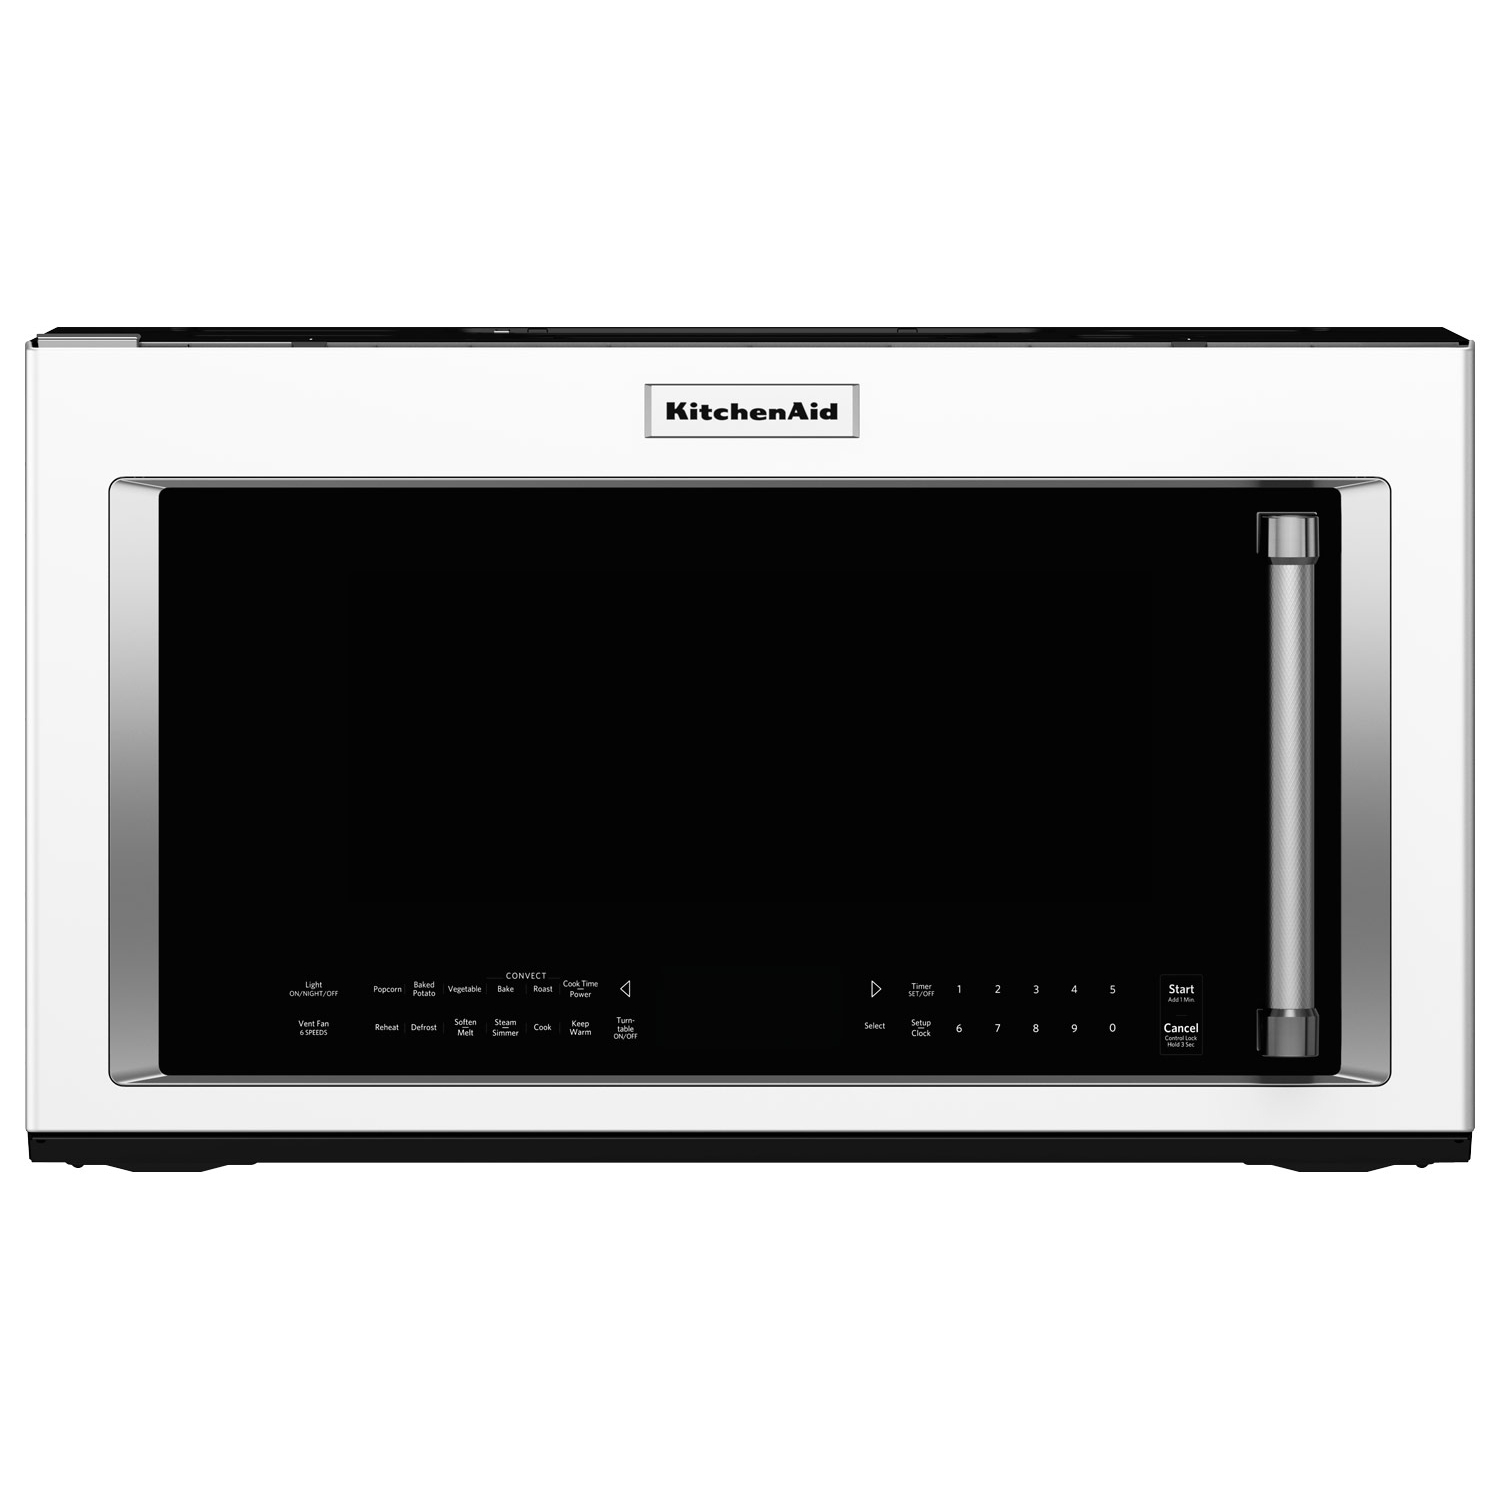 KitchenAid Microwave Model KMHC319EWH